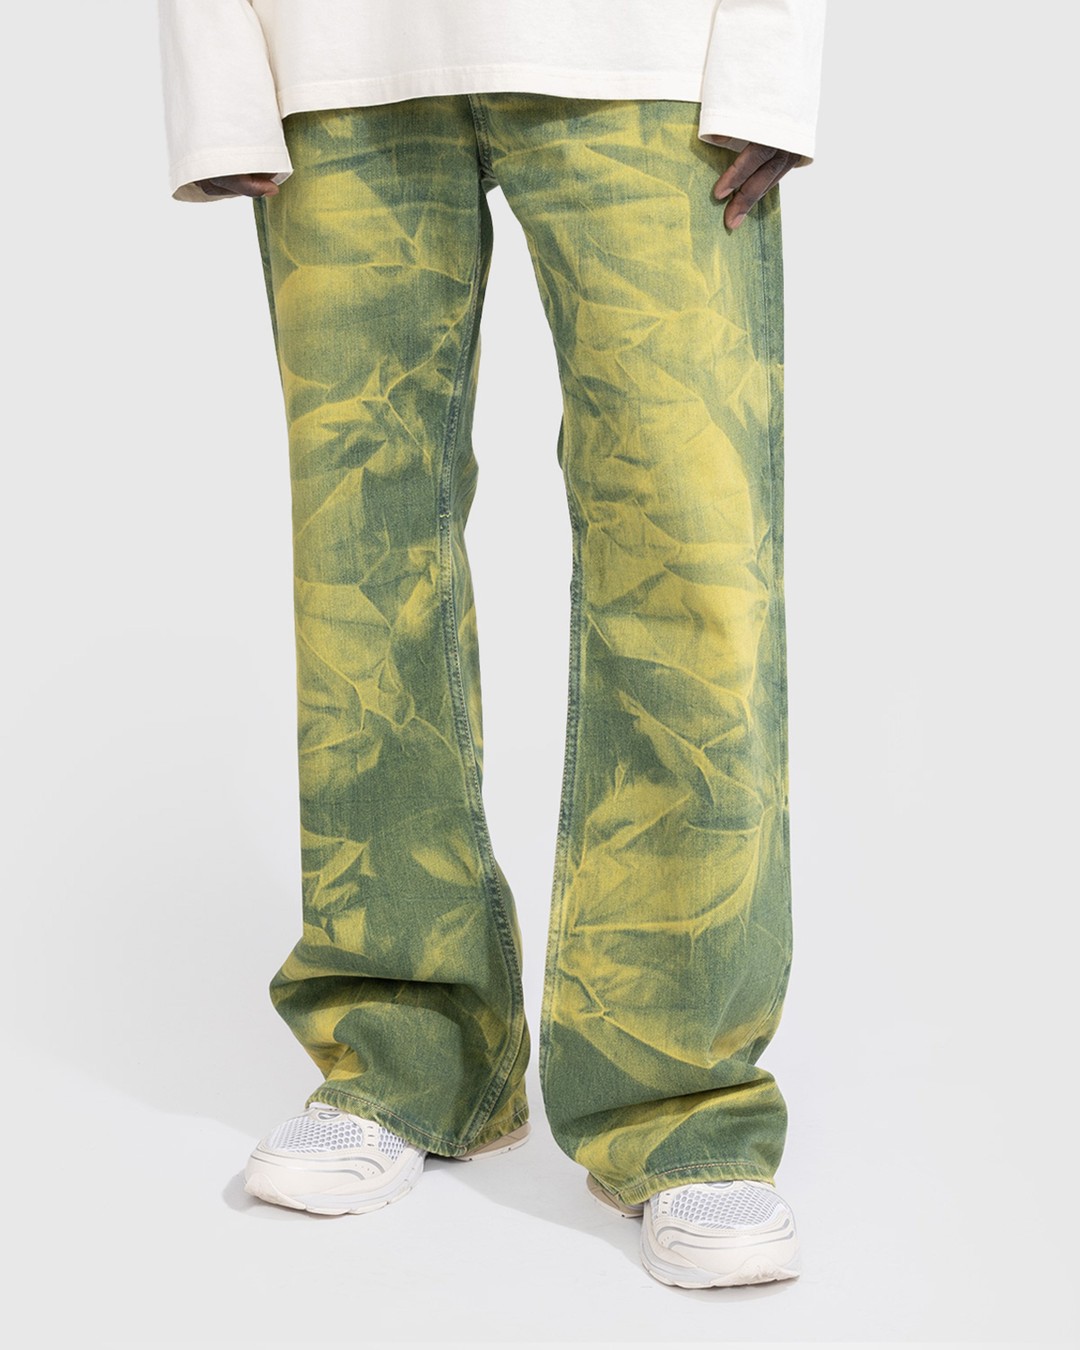 Acne Studios – Loose Fit Jeans 2021 Yellow/Blue - Denim - Multi - Image 4